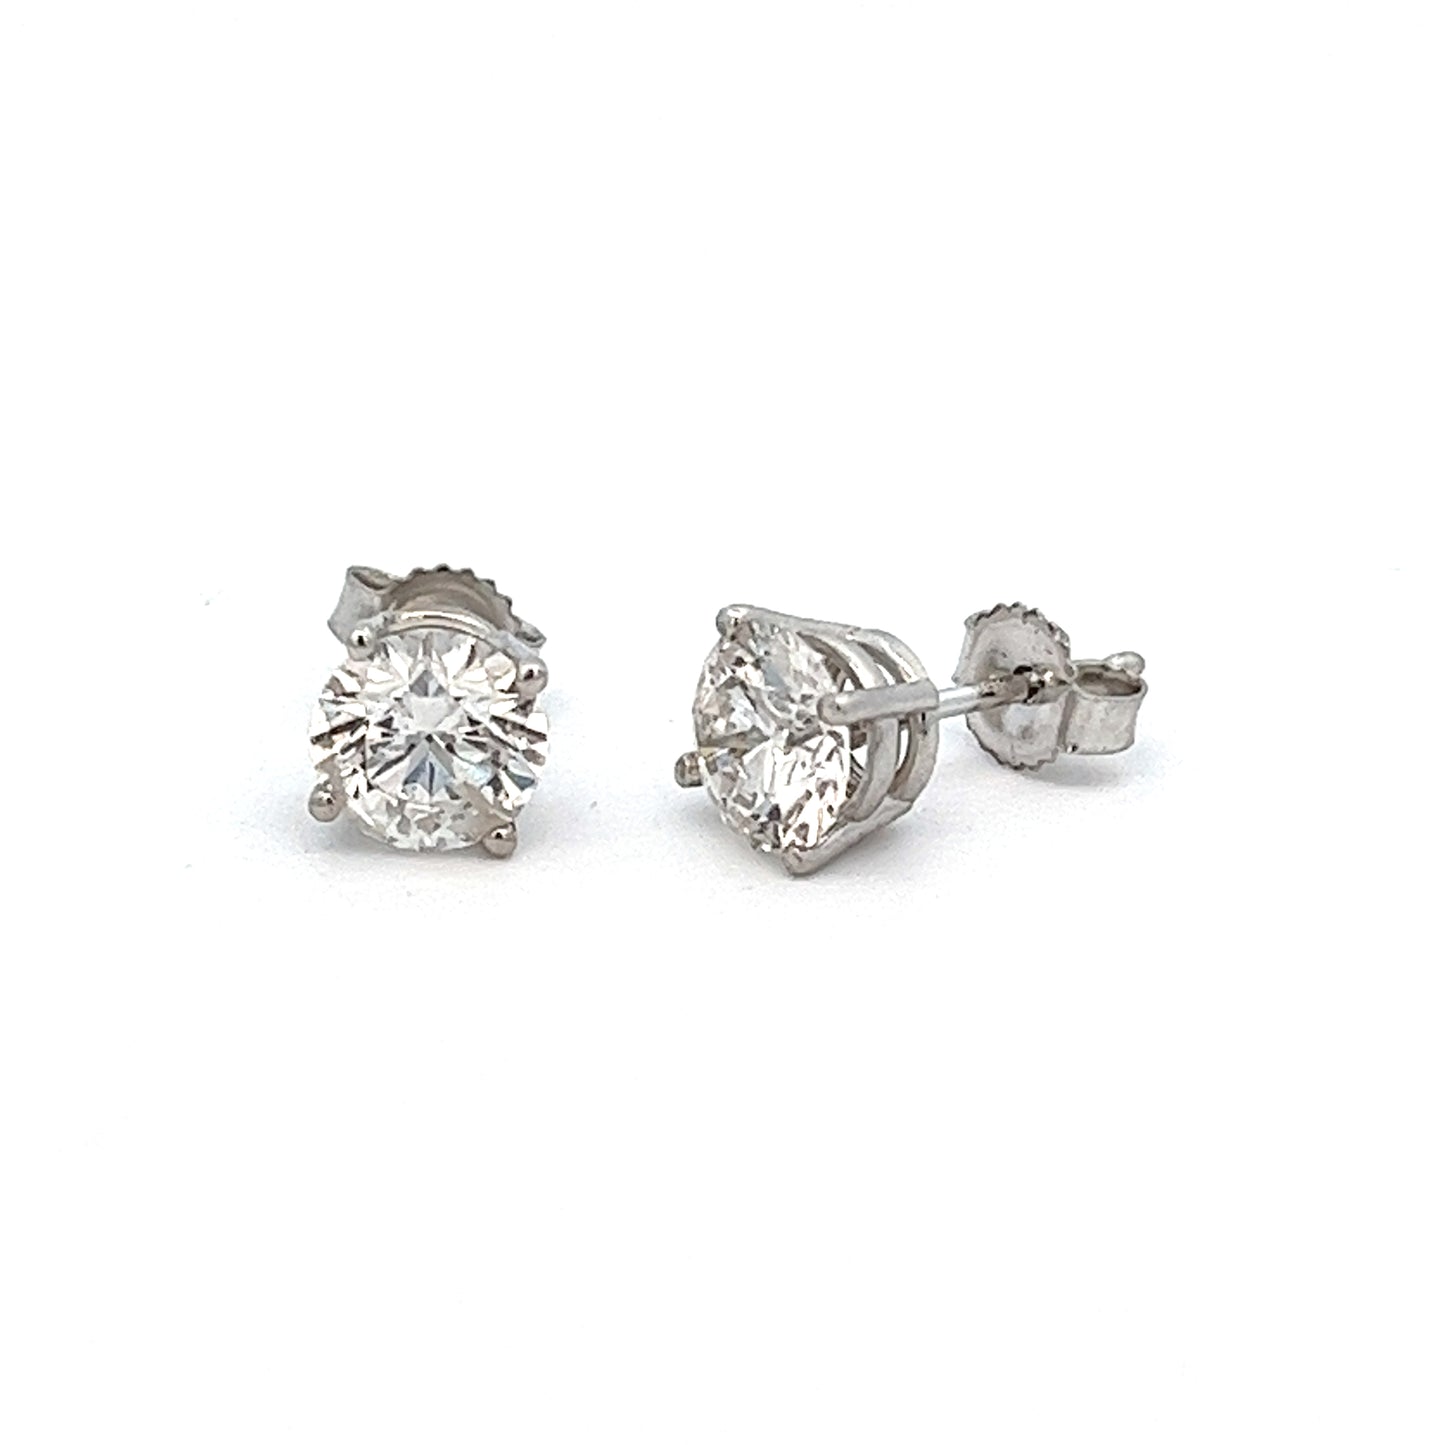 1.55ct total weight lab grown diamond earrings